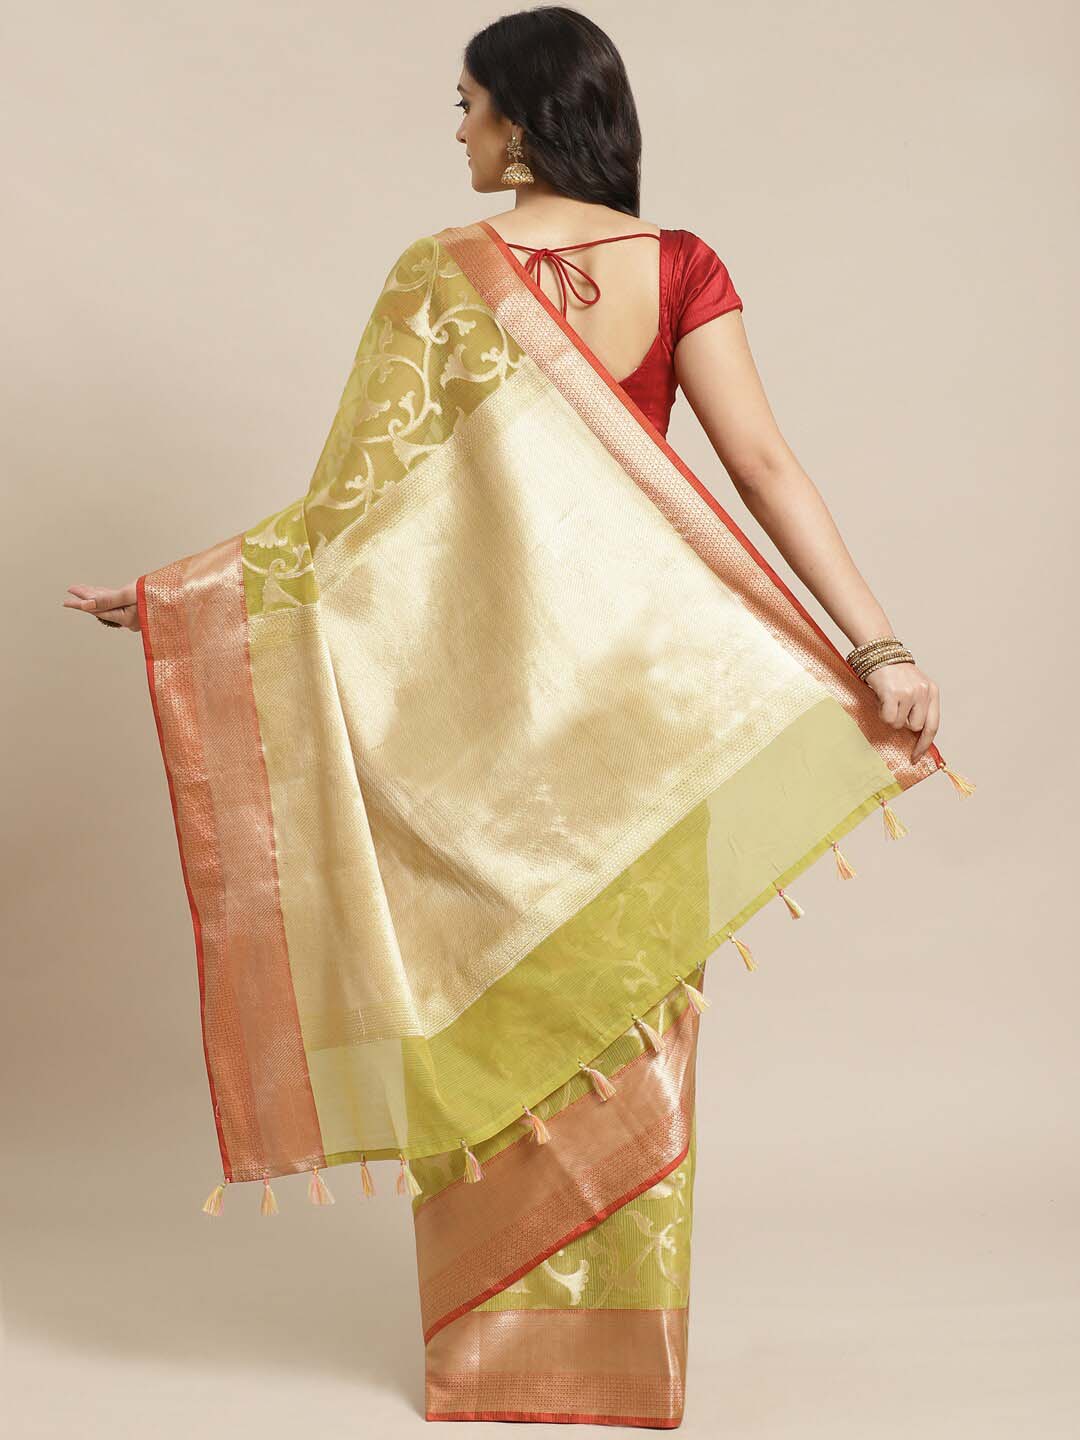 Indethnic Banarasi Lime Green Woven Design Festive Wear Saree - View 1